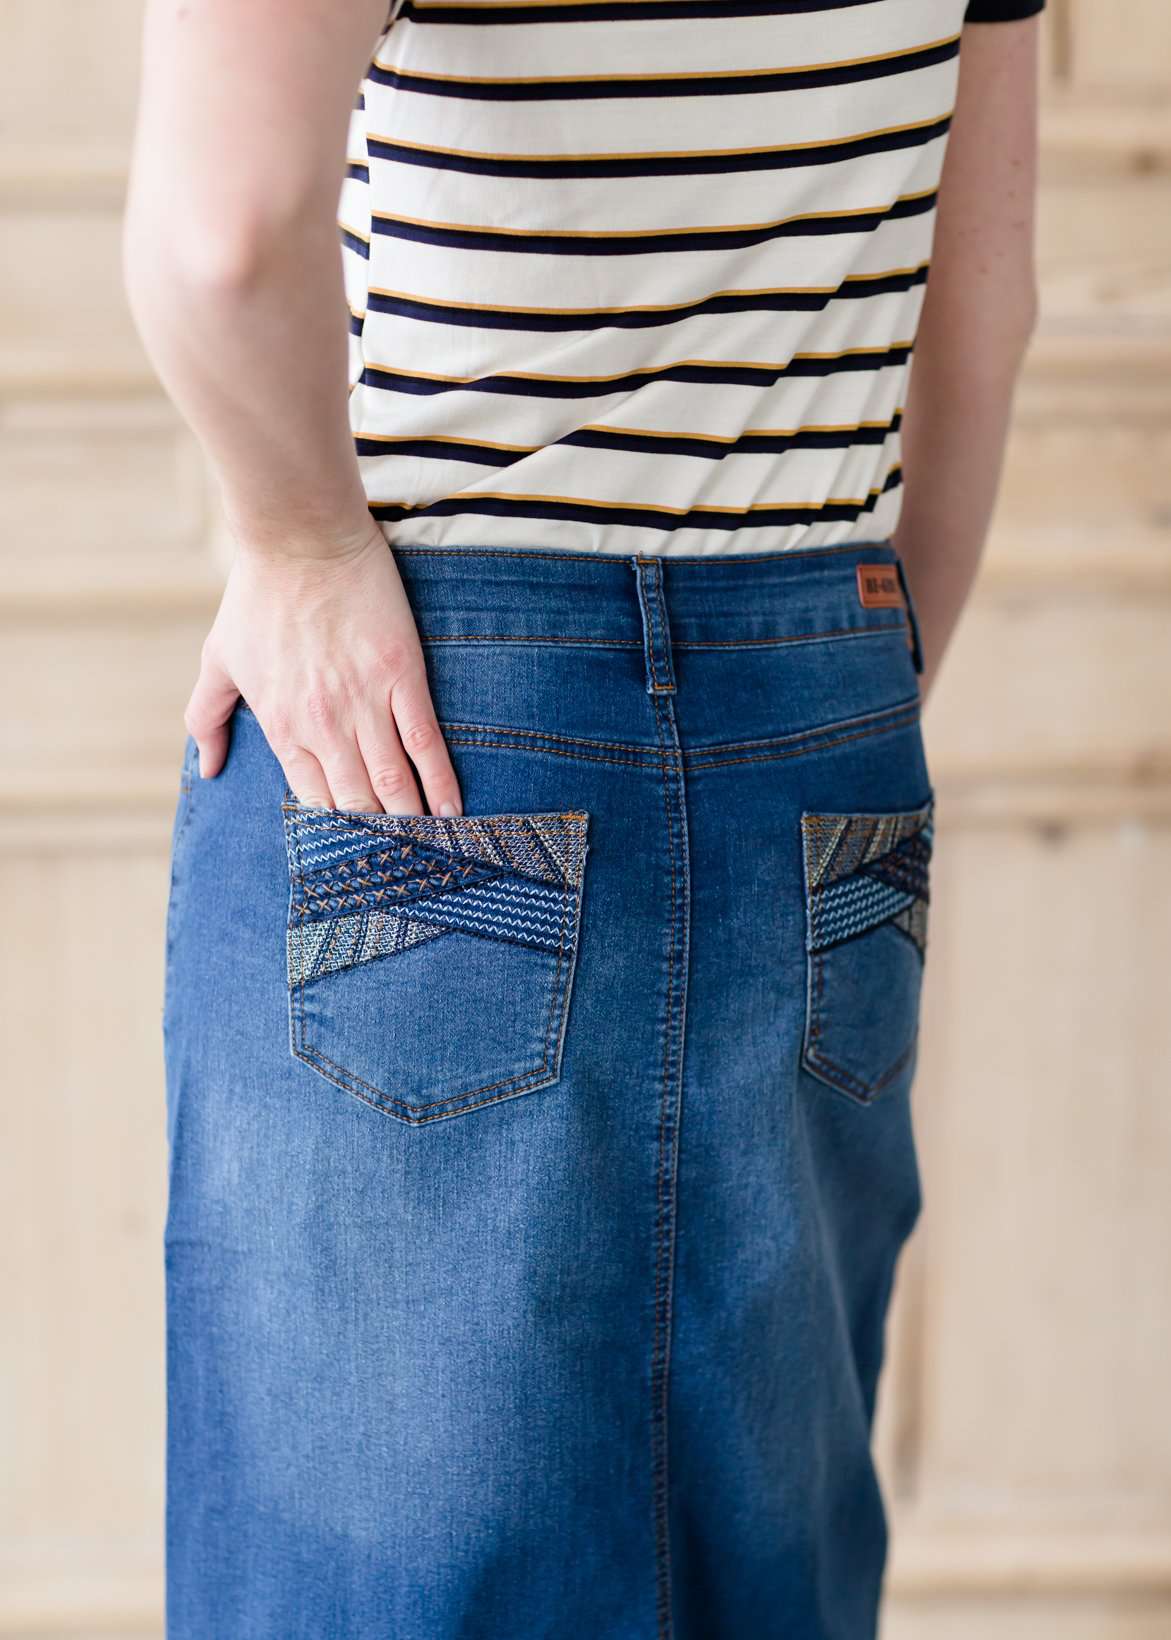 Modest long denim jean skirt with pocket details